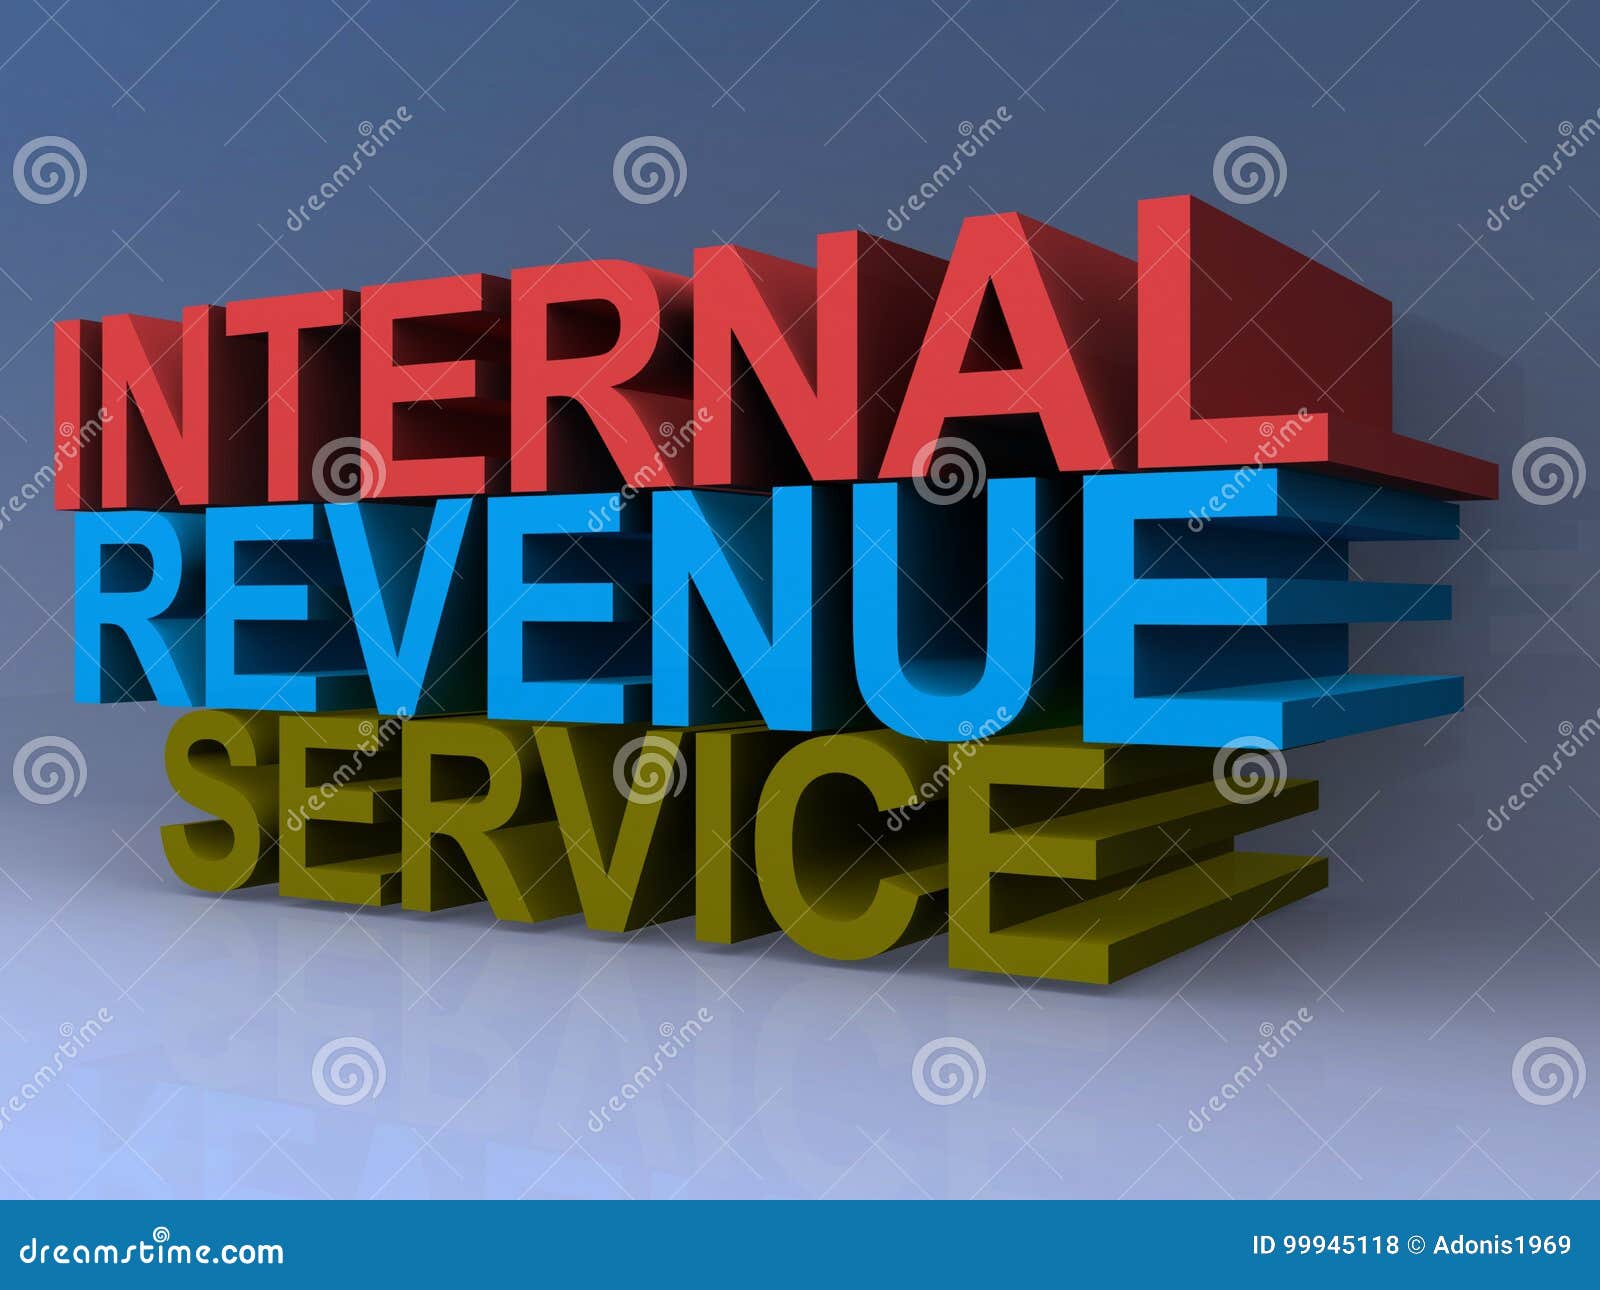 internal revenue service 